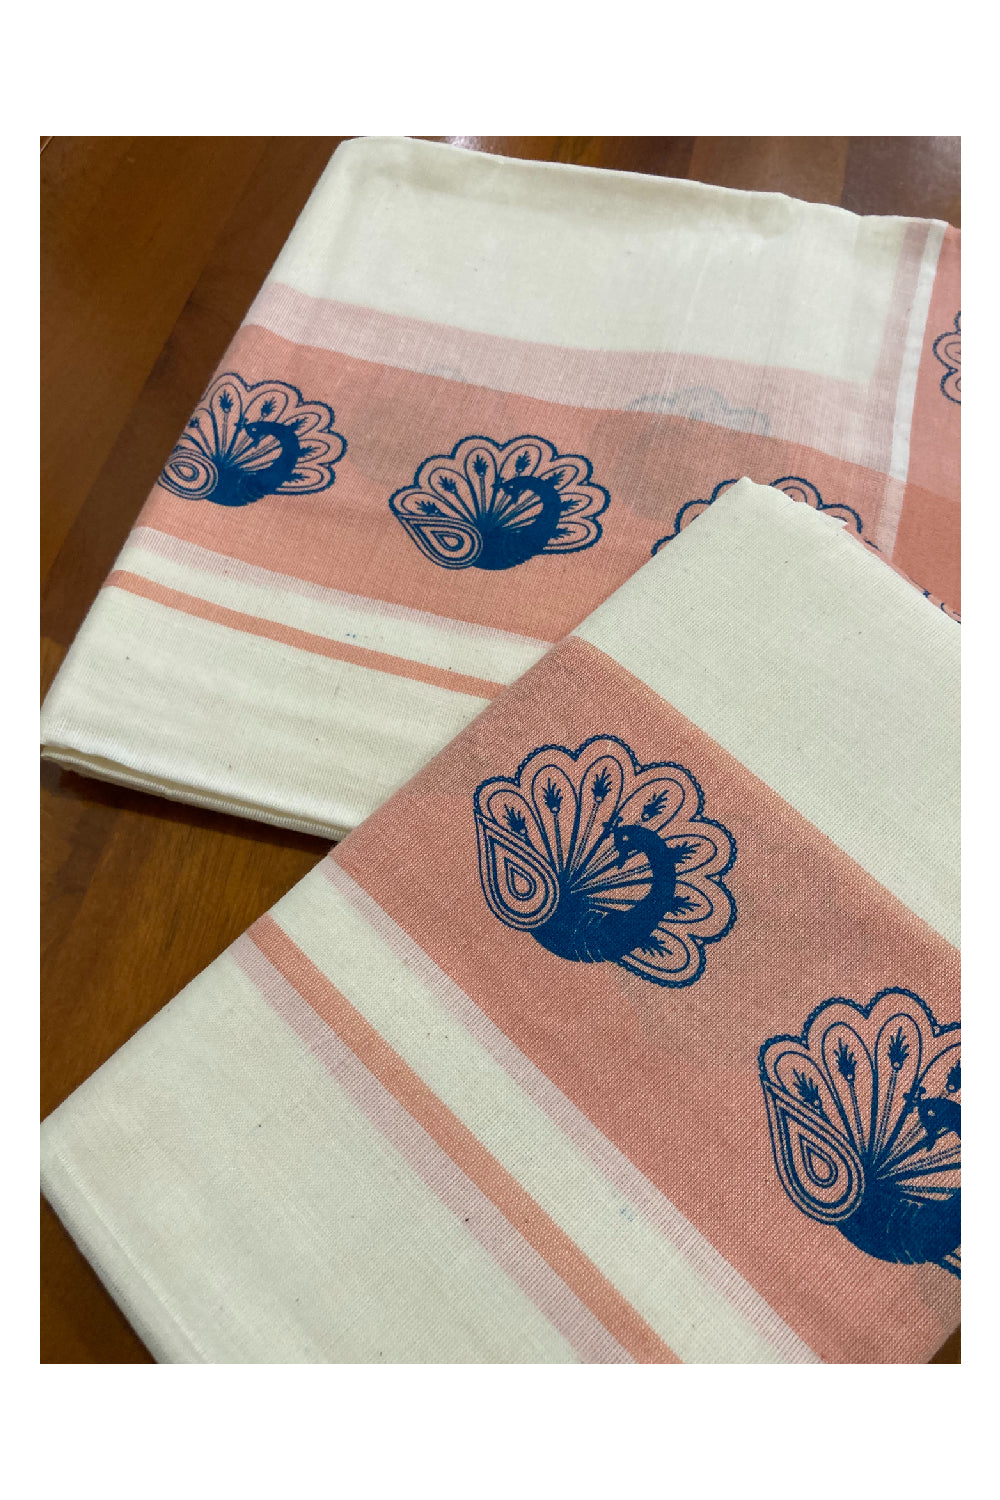 Single Set Mundu in Pink Sada Kara Border with Hand Block Prints